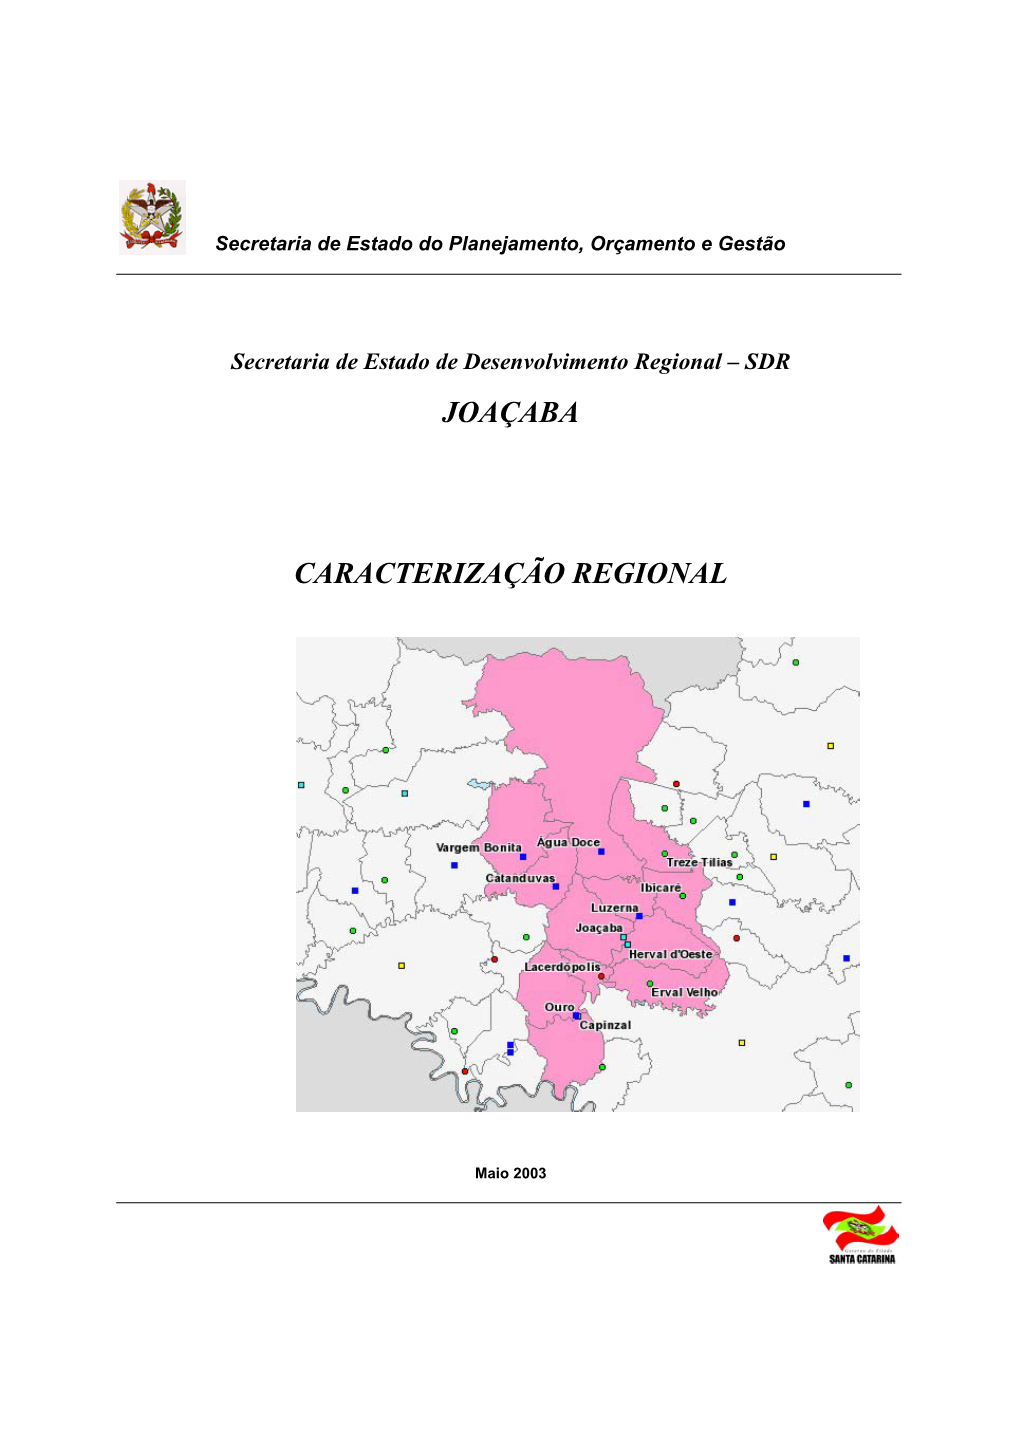 Joaçaba Caracterização Regional